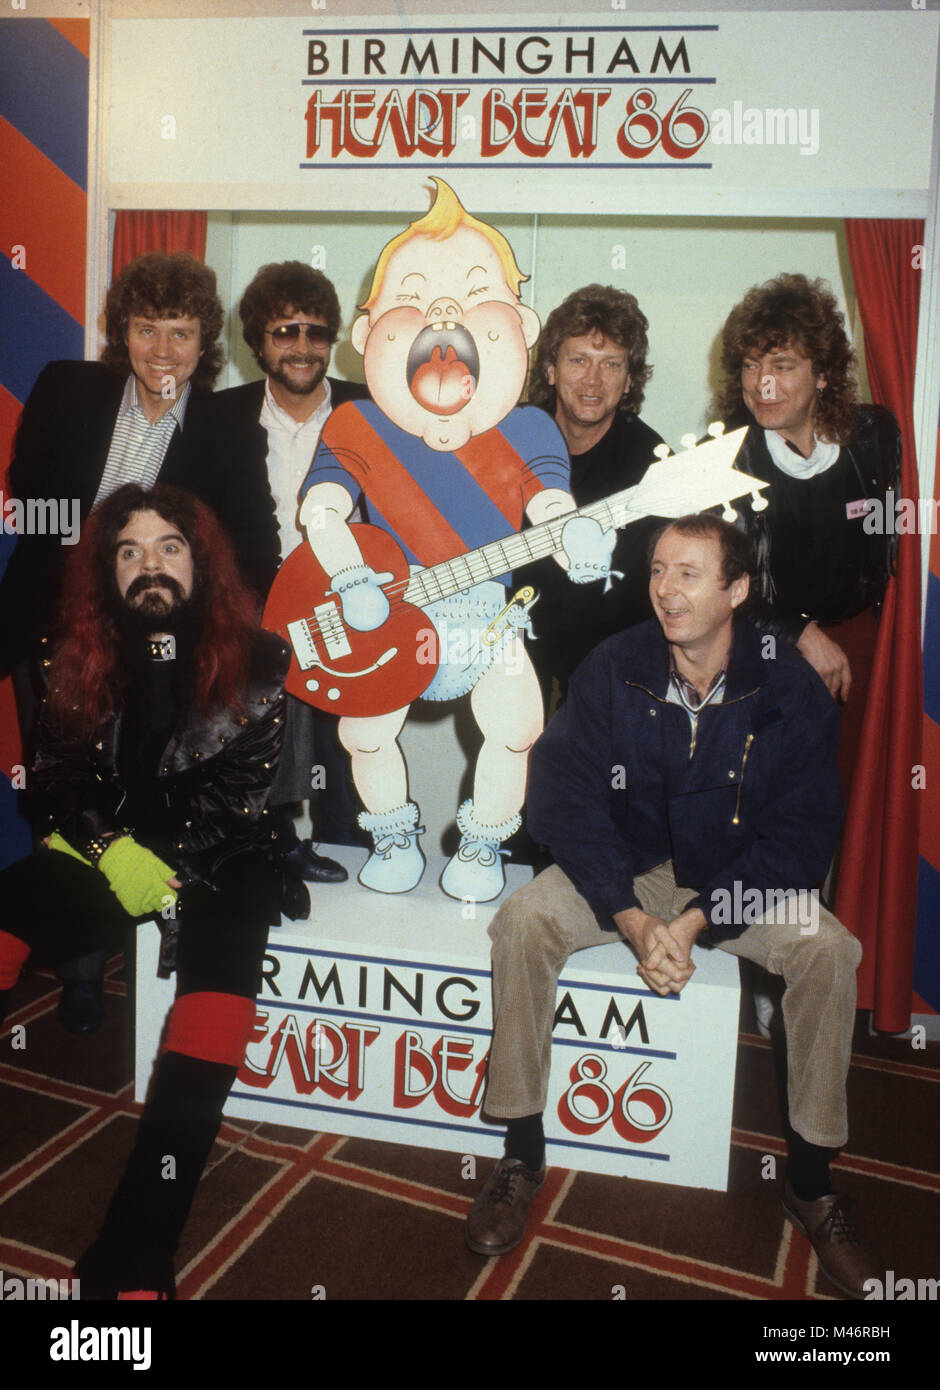 The launch of Heart Beat 86 with pop celebrities Bev Bevan, Roy Wood, Jeff Lynne (ELO) John Lodge (Moody Blues), Jasper Carrott and Robert Plant. Stock Photo